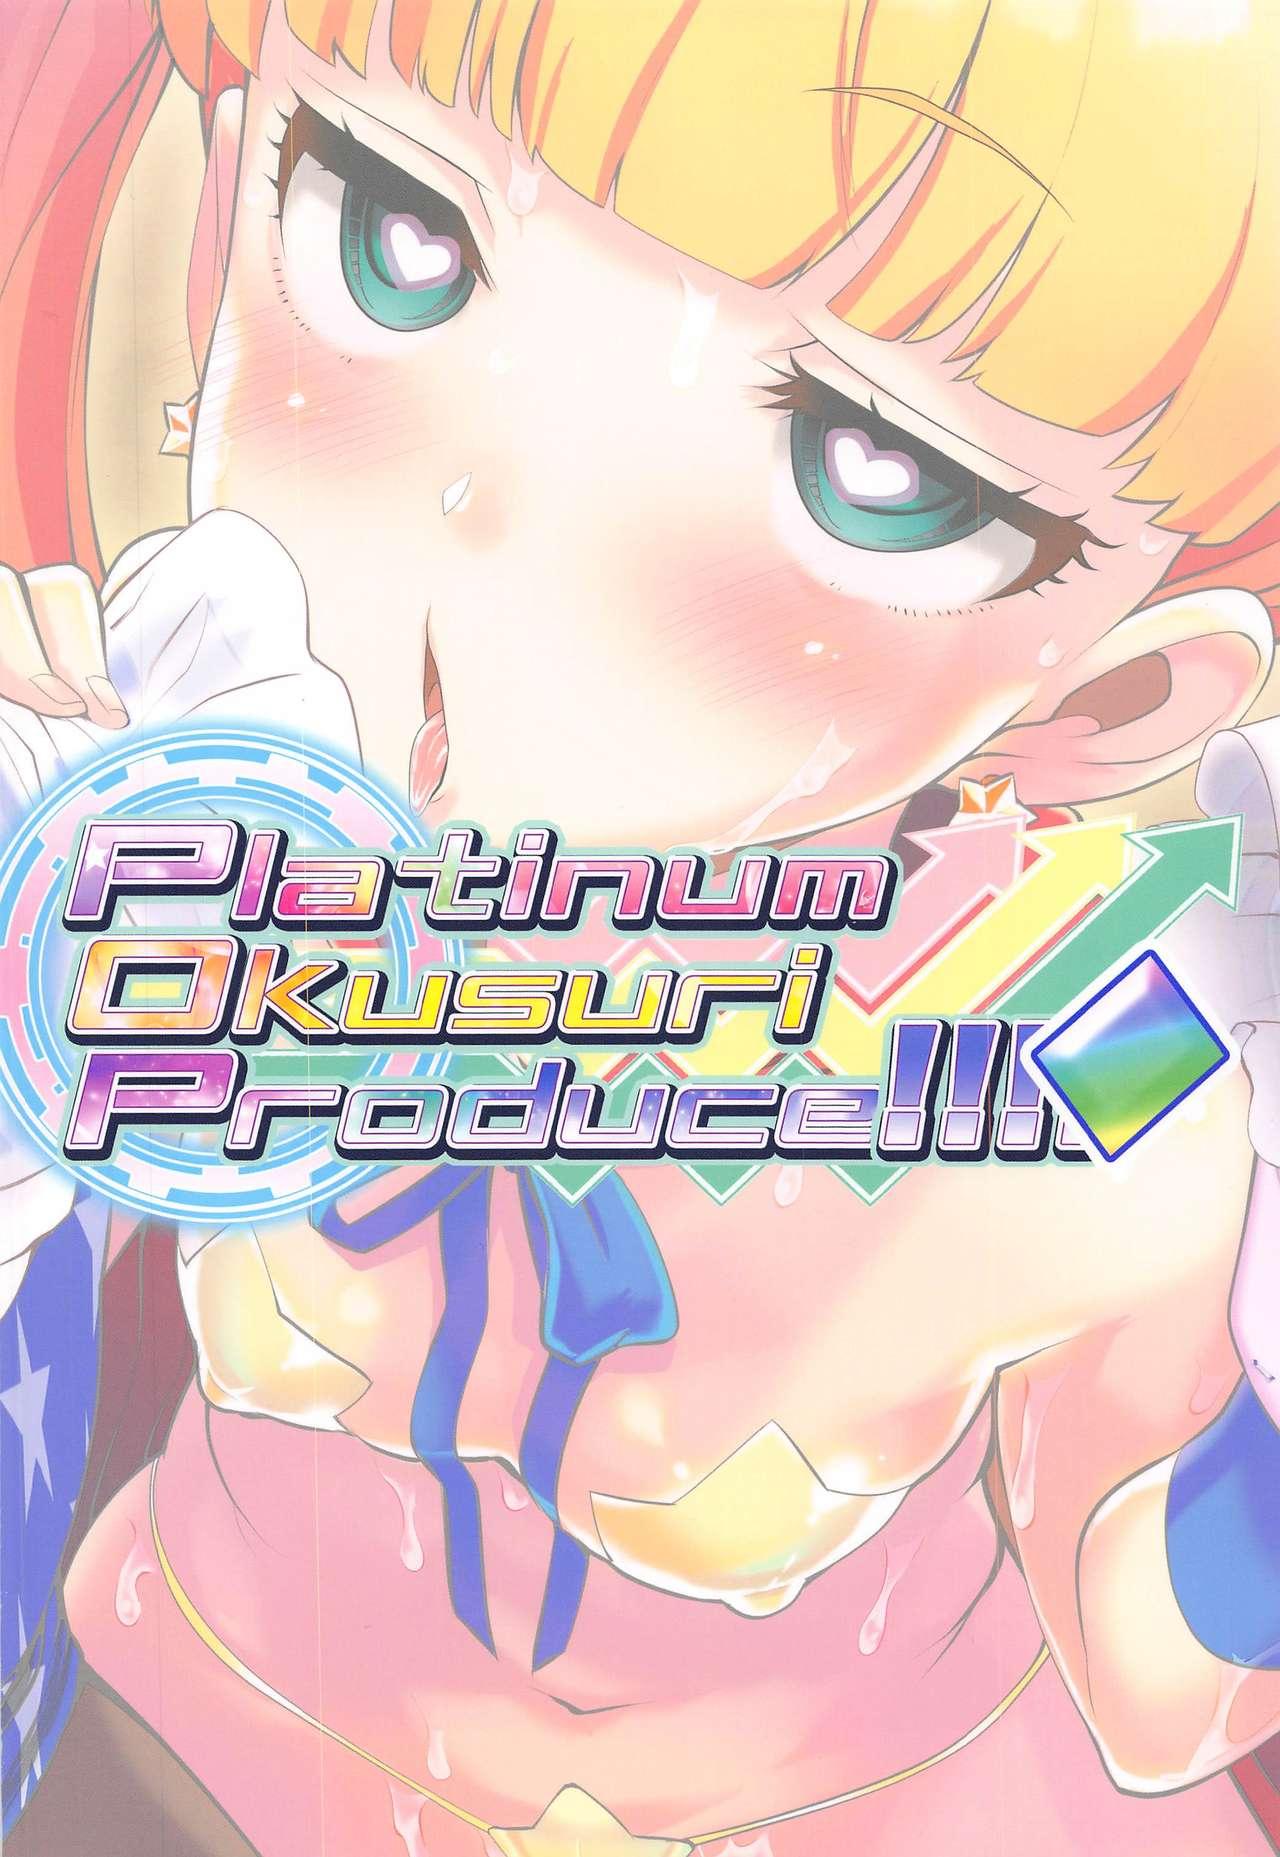 Platinum Okusuri Produce!!!! ◇ 17